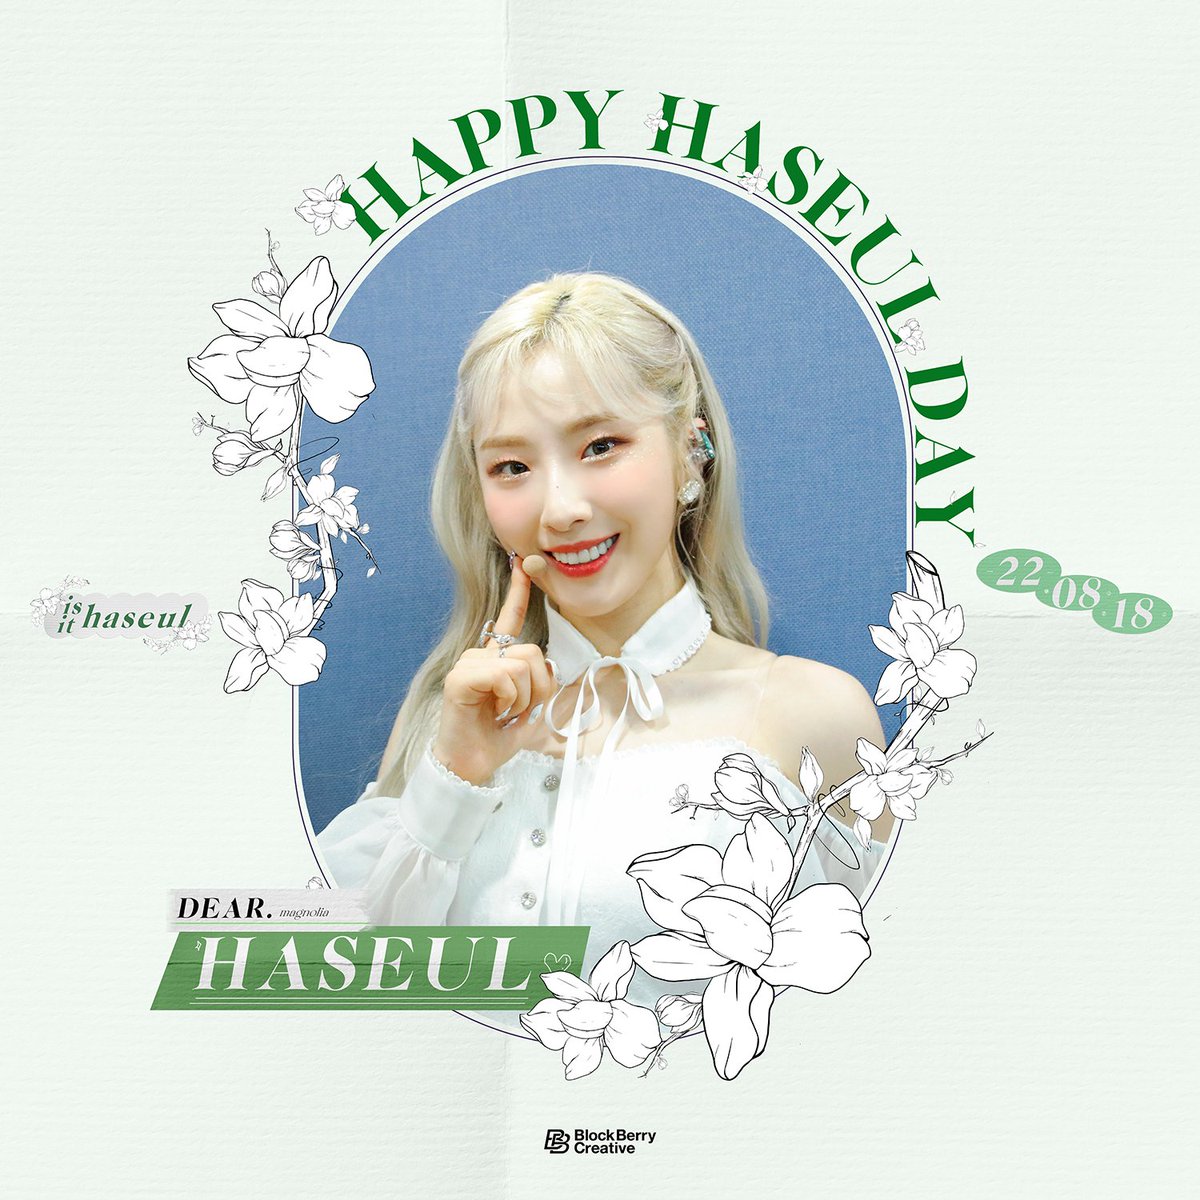 #0818_HBD_HaSeul
#Happy_HaSeul_Day

이달의 소녀의 하선배☕
하슬이의 생일을 축하합니다💕

#이달의소녀 #하슬 #LOONA #HaSeul